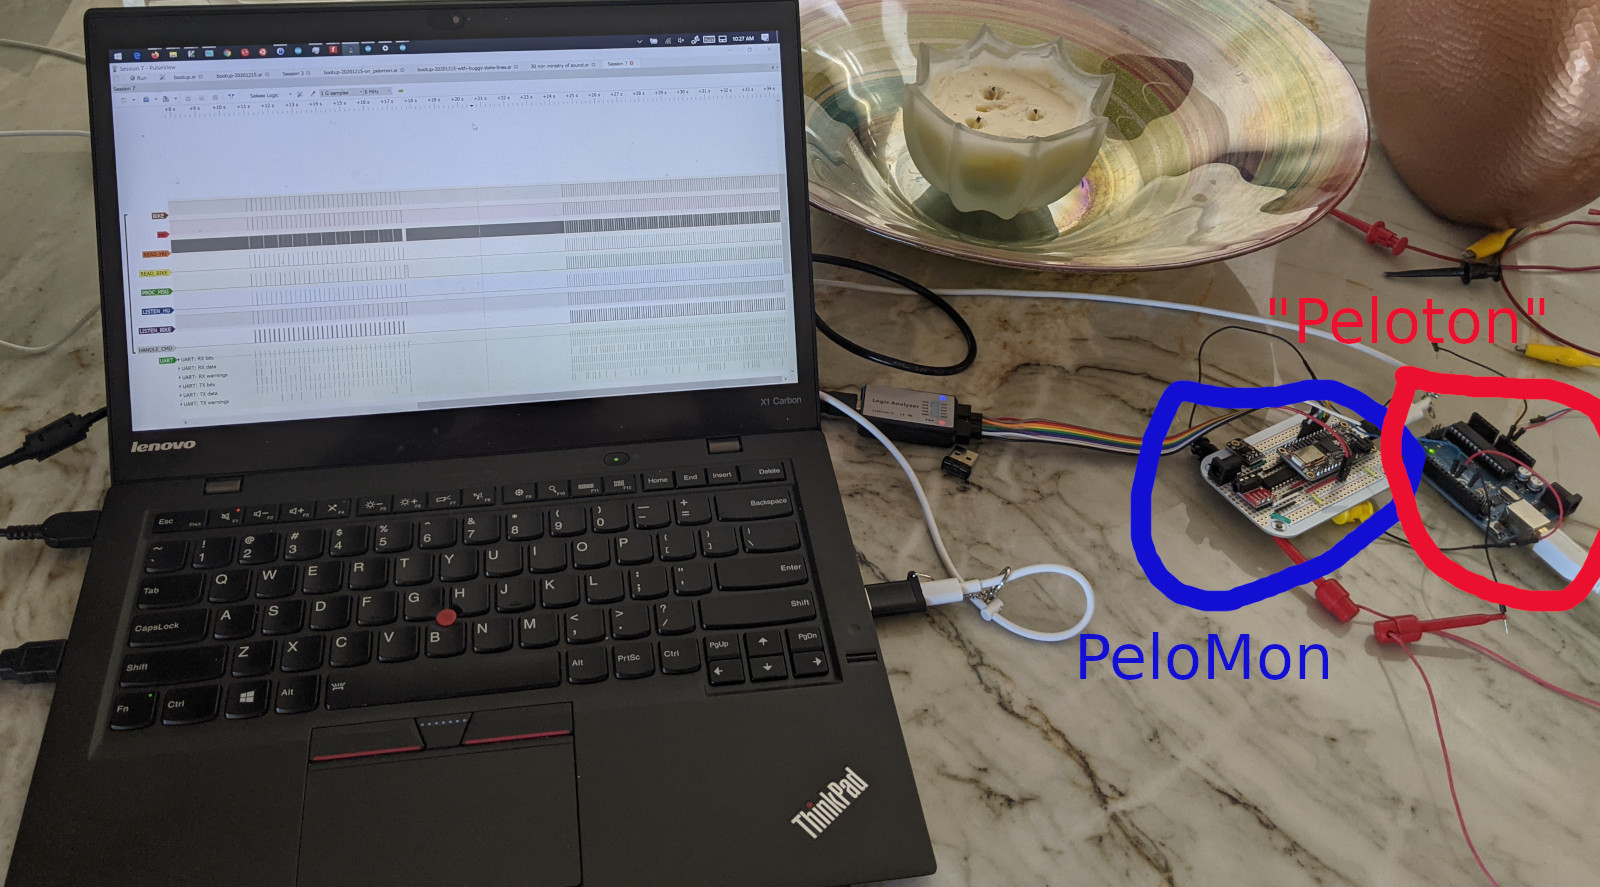 PeloMon and hardware emulator